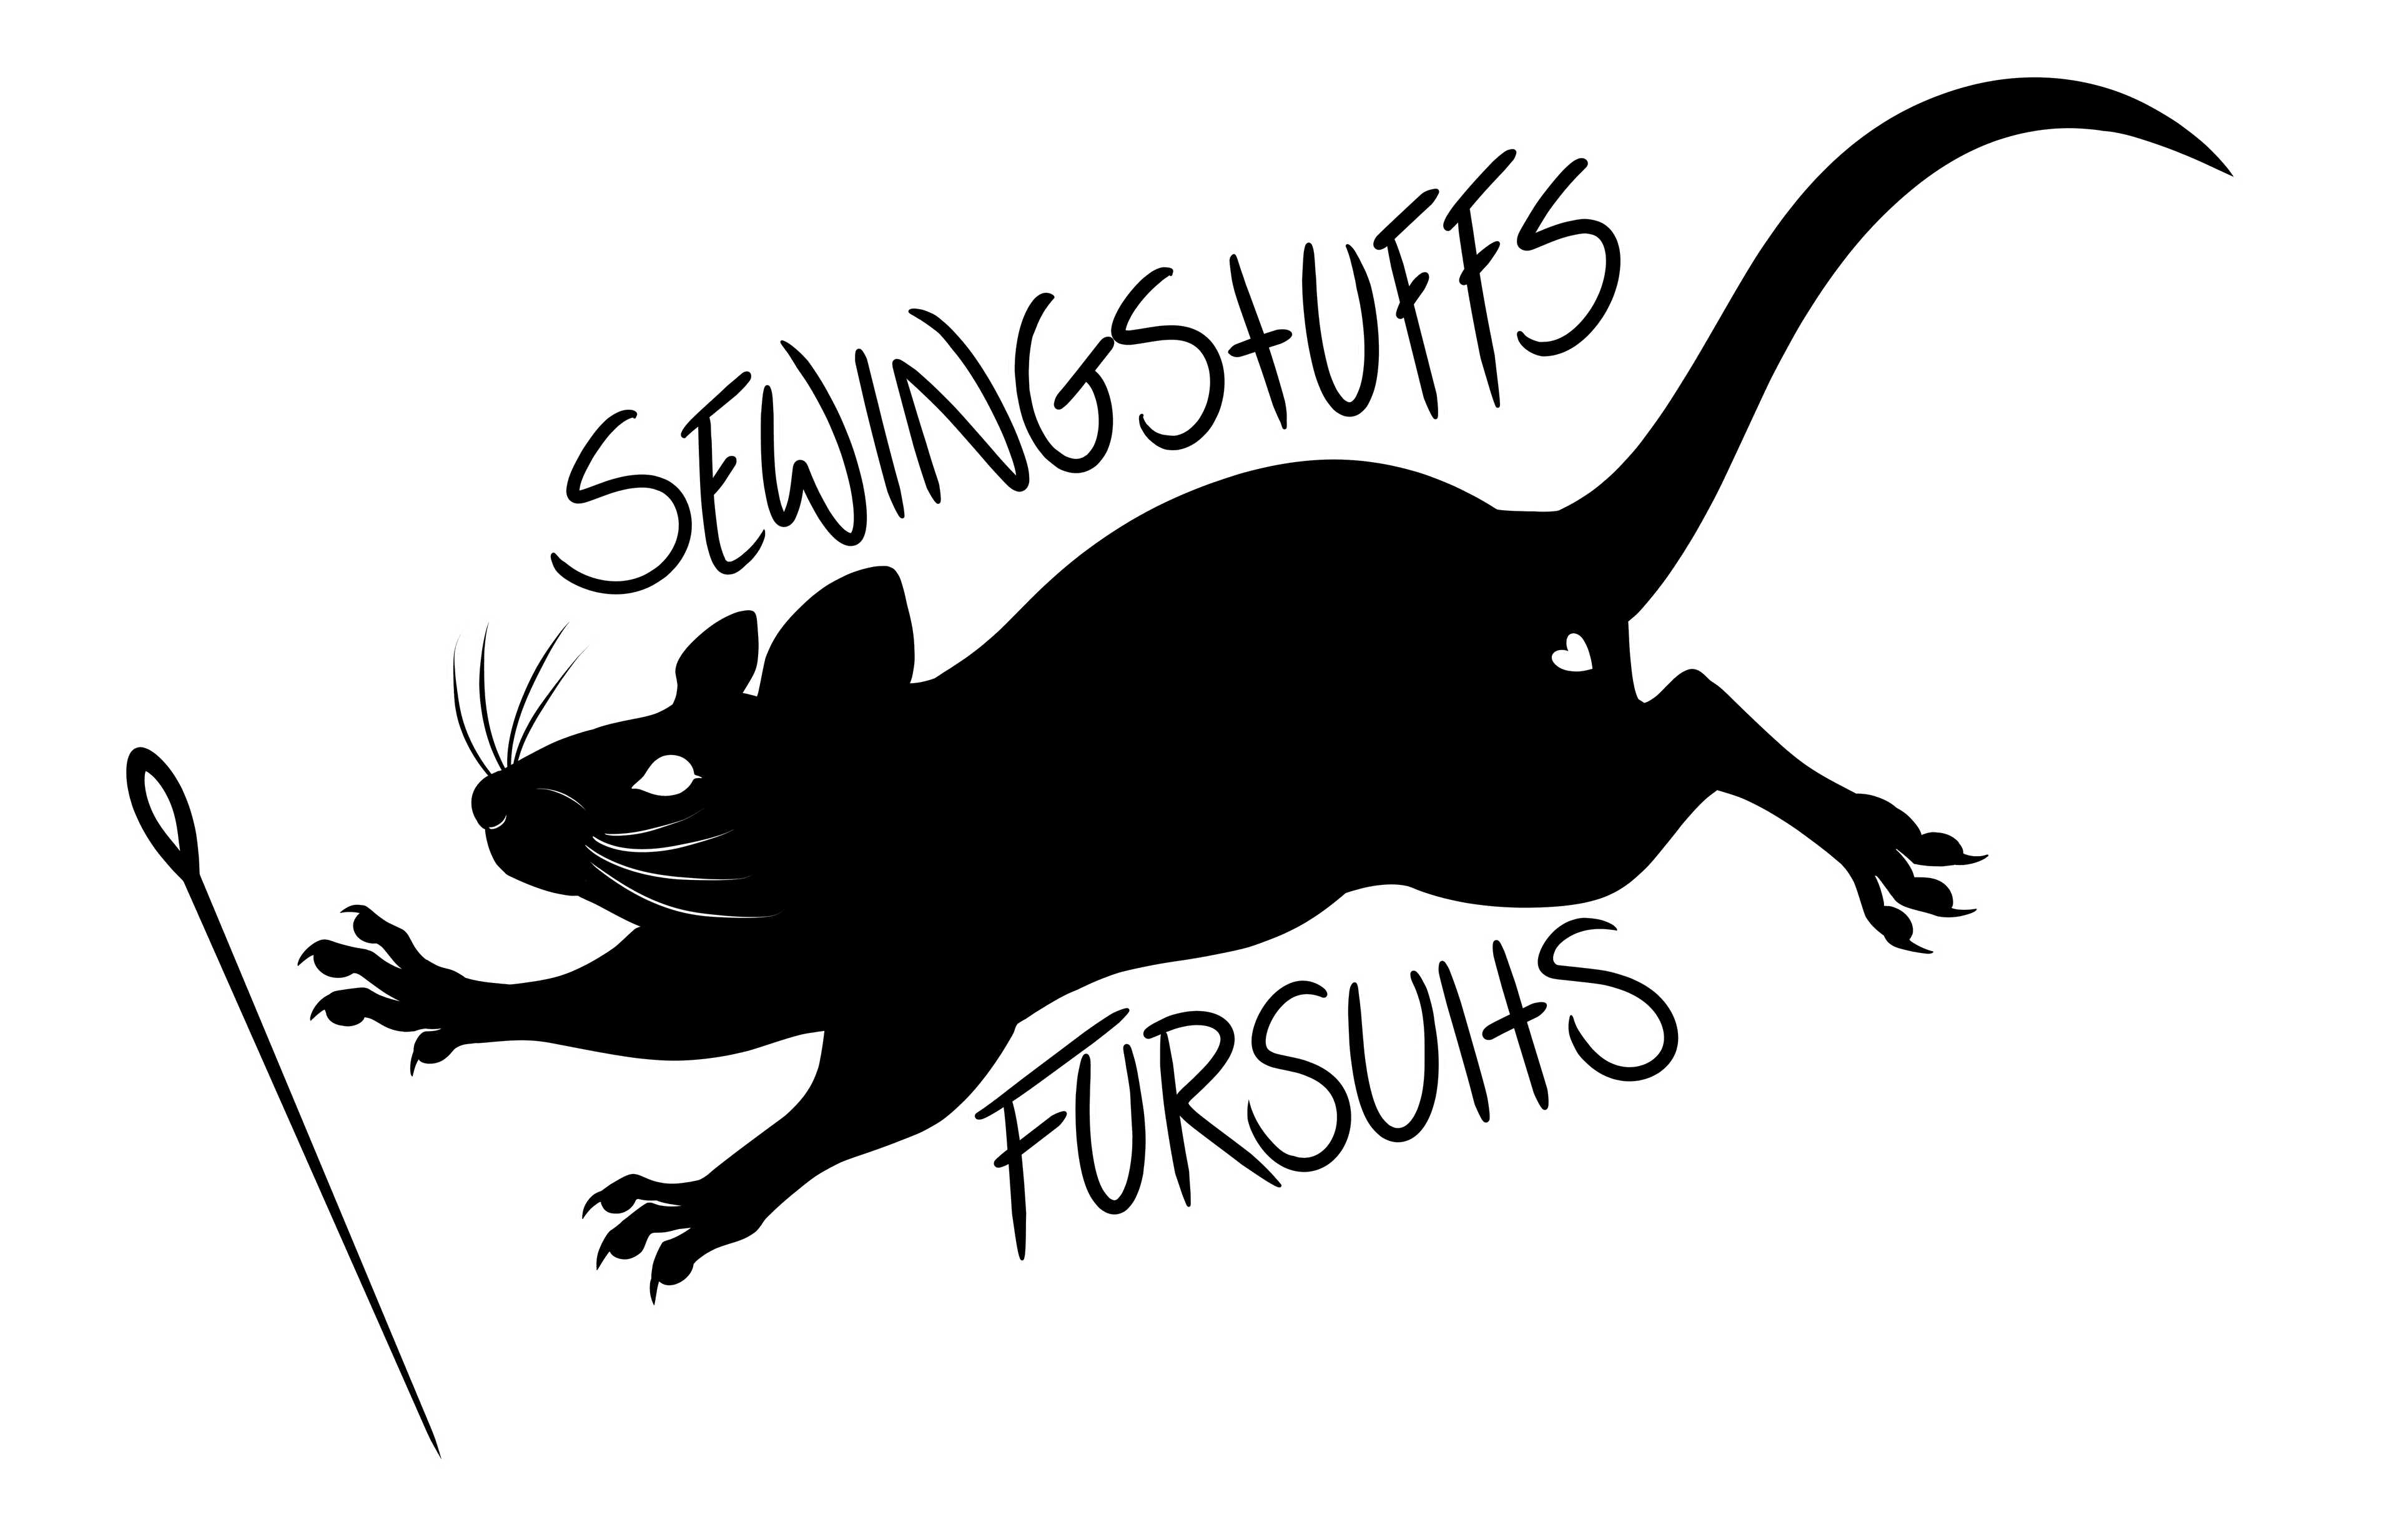 SewingStuffs Fursuits Logo